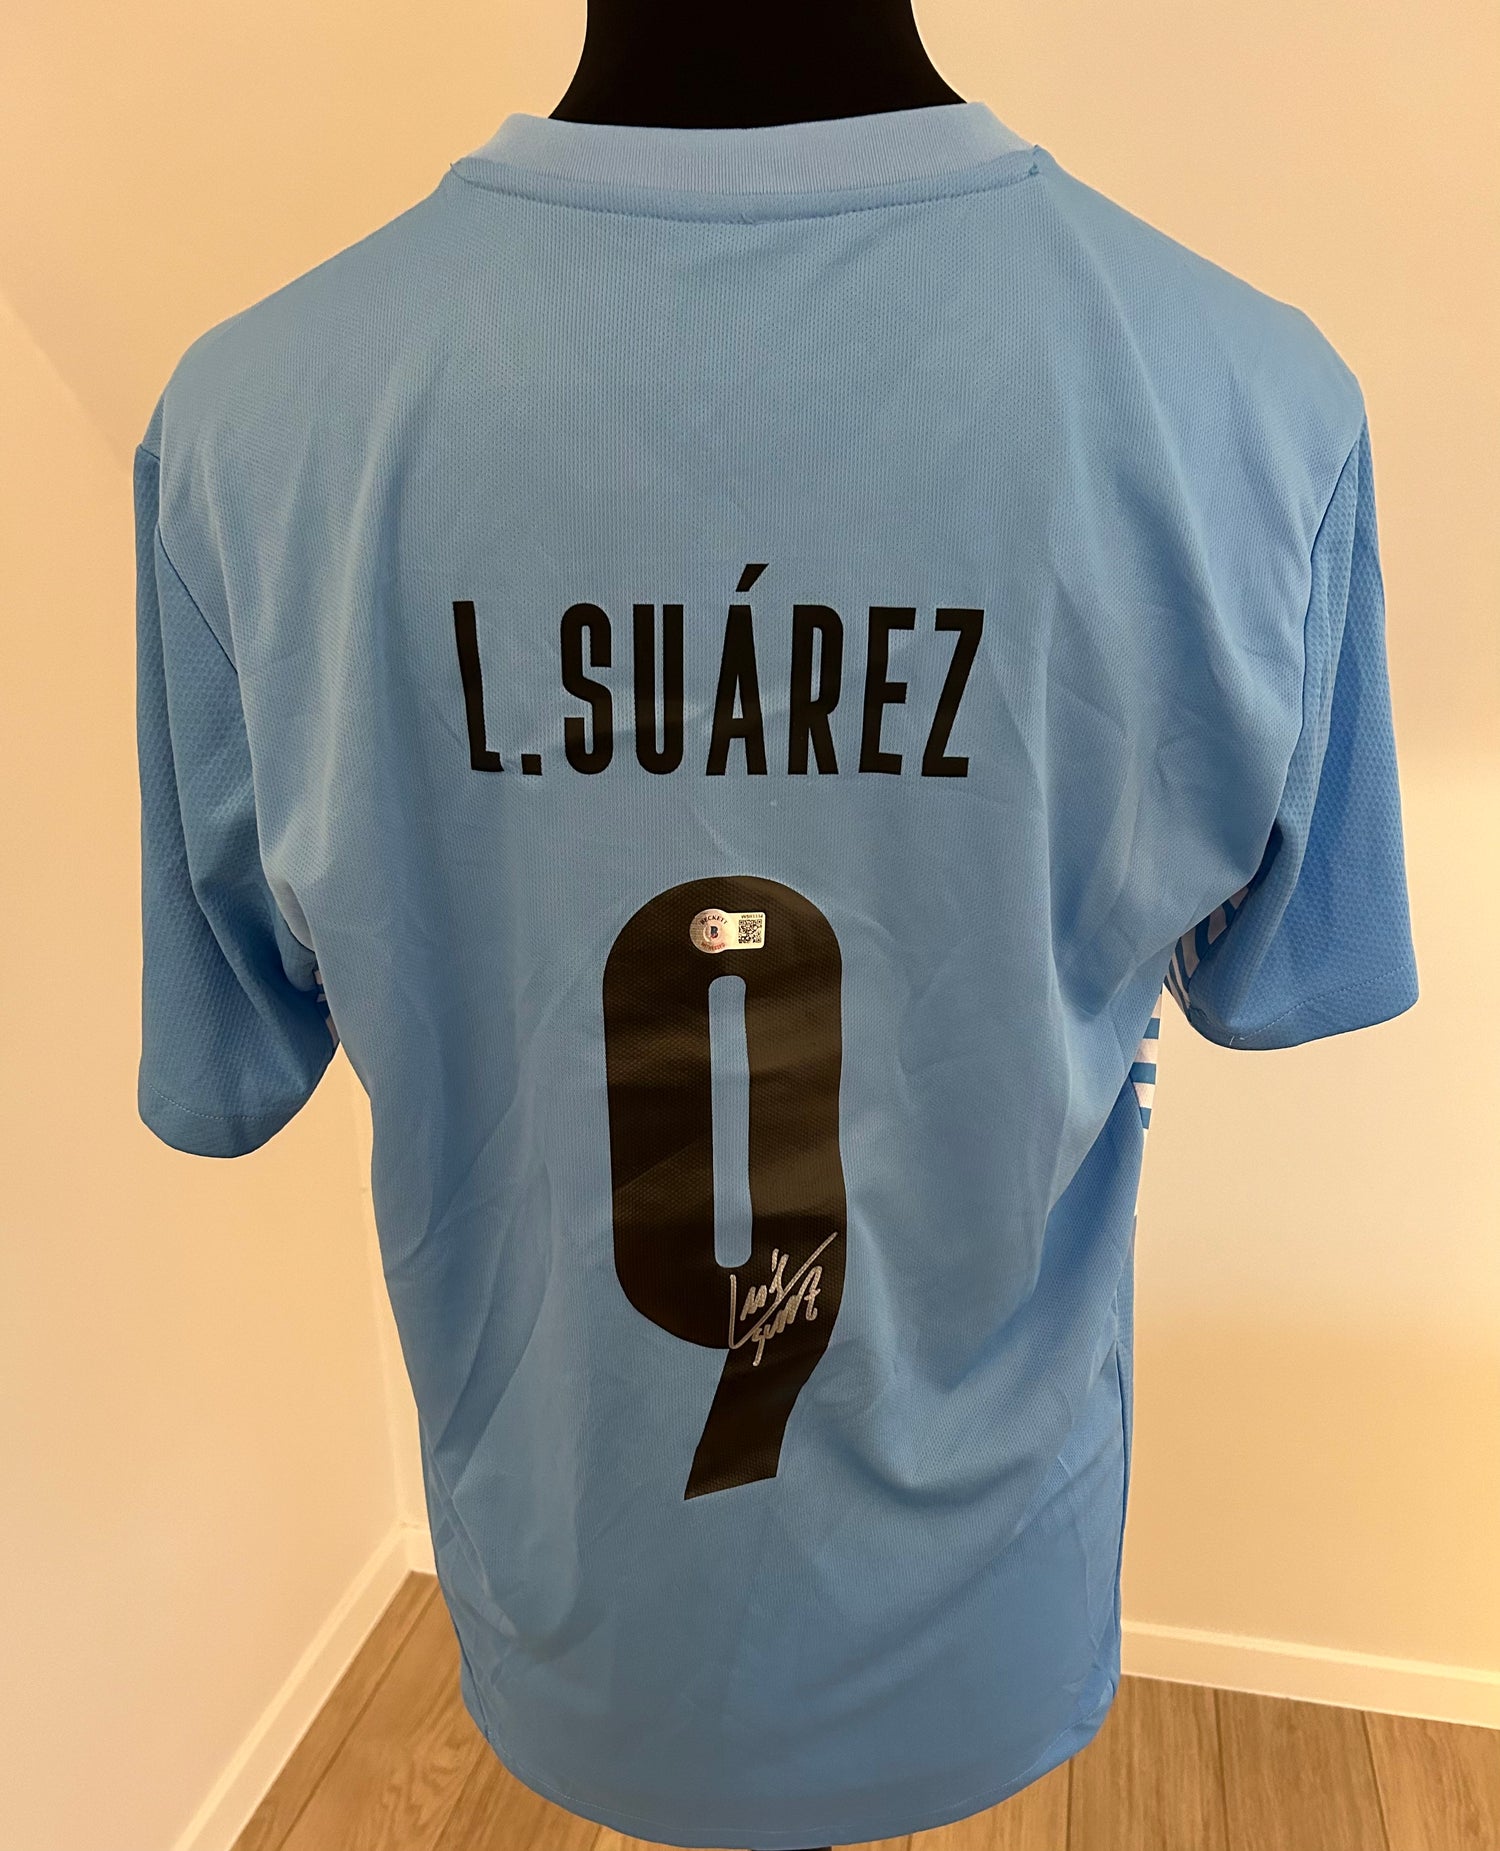 Suarez - Uruguay